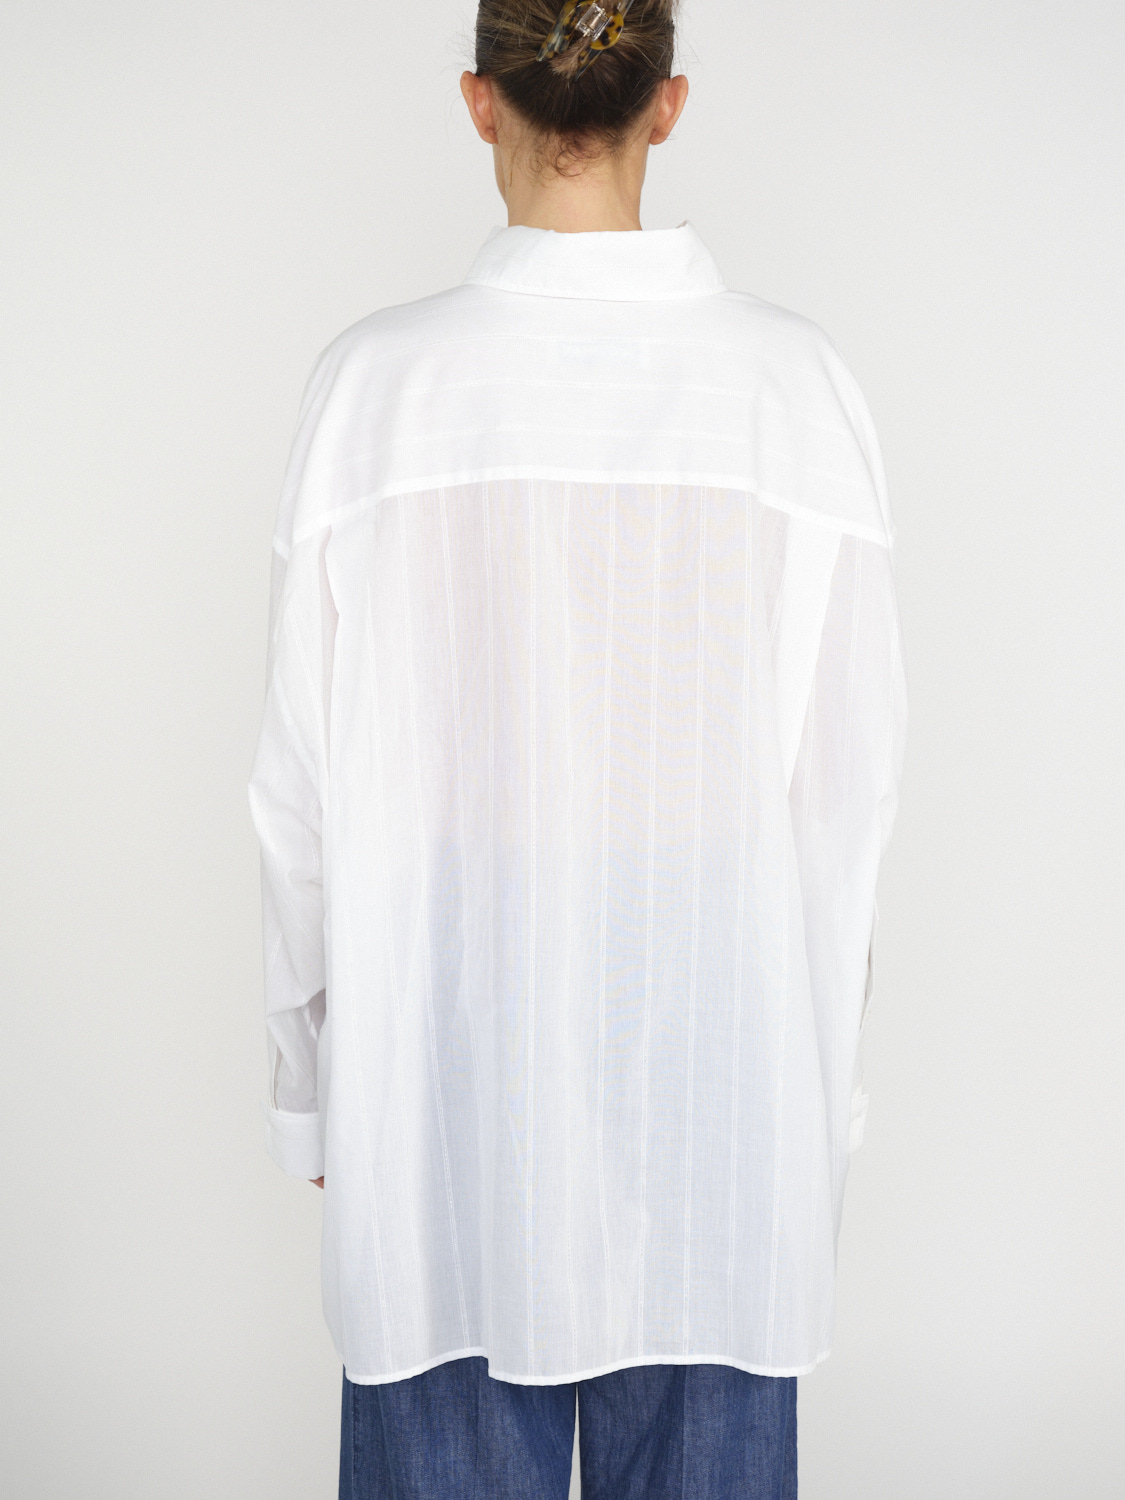 Darkpark Nathalie – Oversized Baumwoll-Hemd white S